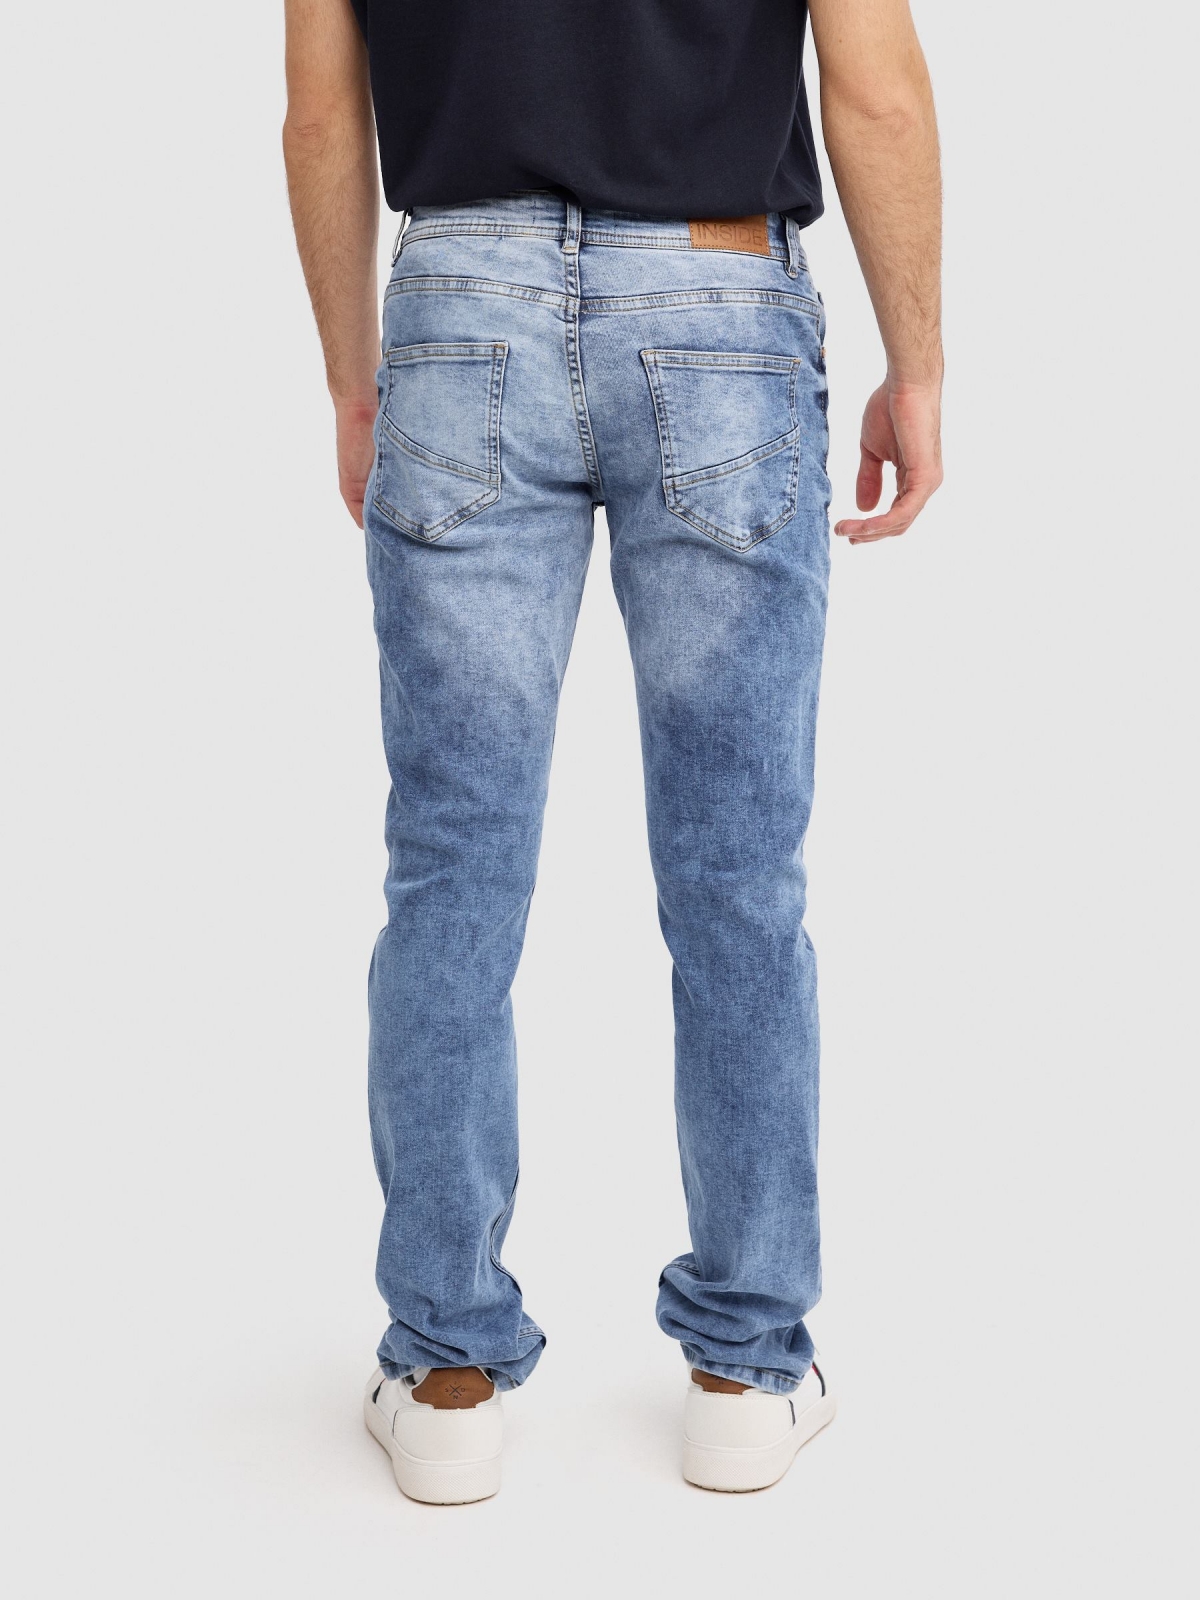 Regular wash jeans blue middle back view